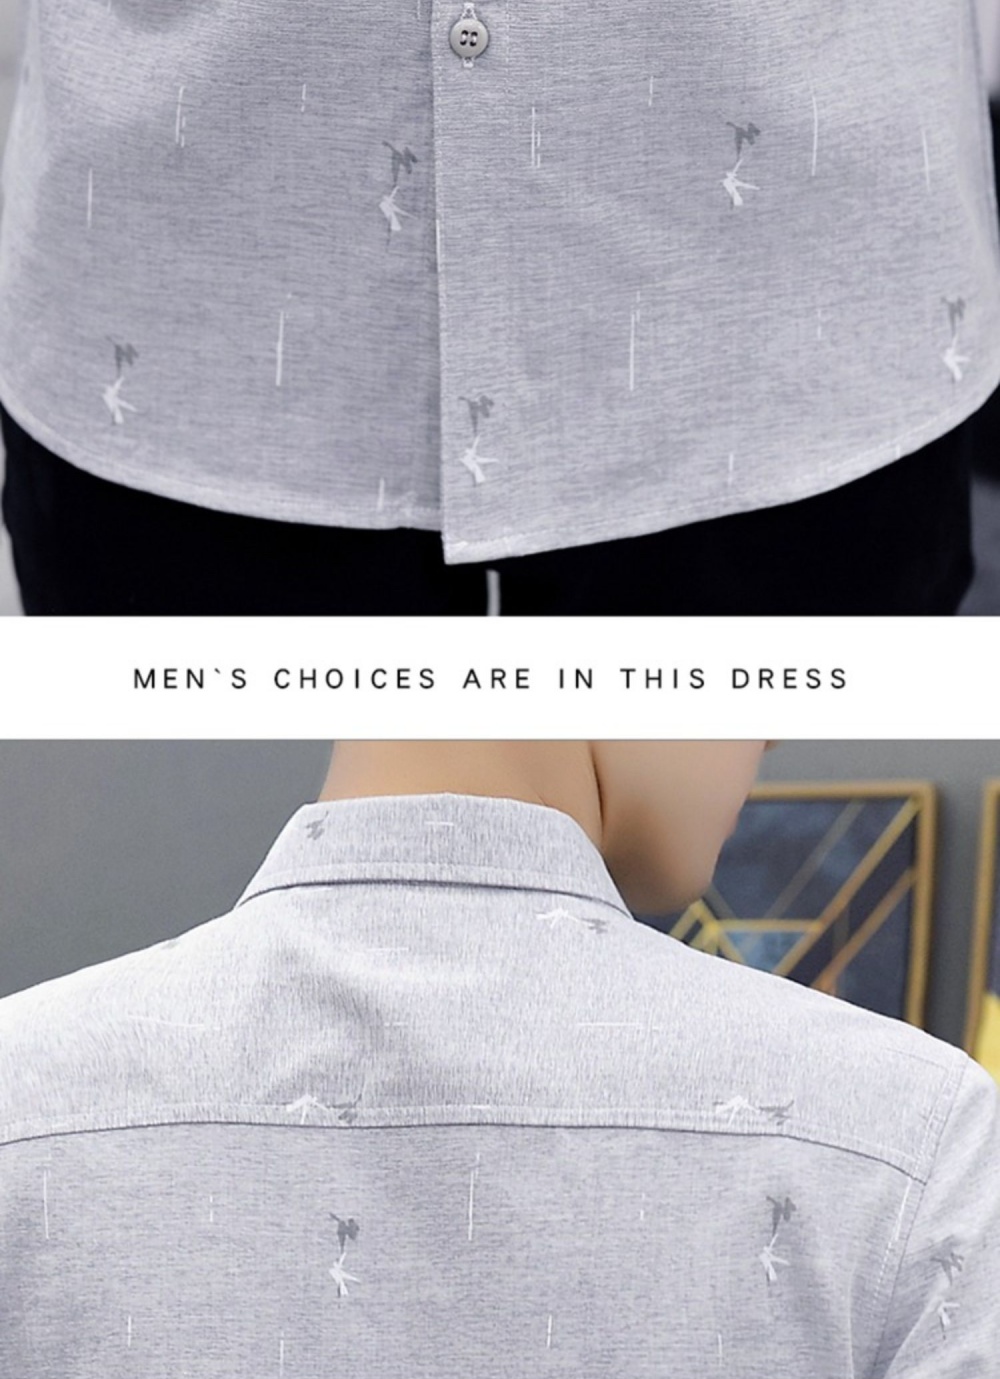 Slim spring shirt fashionable business suit for men